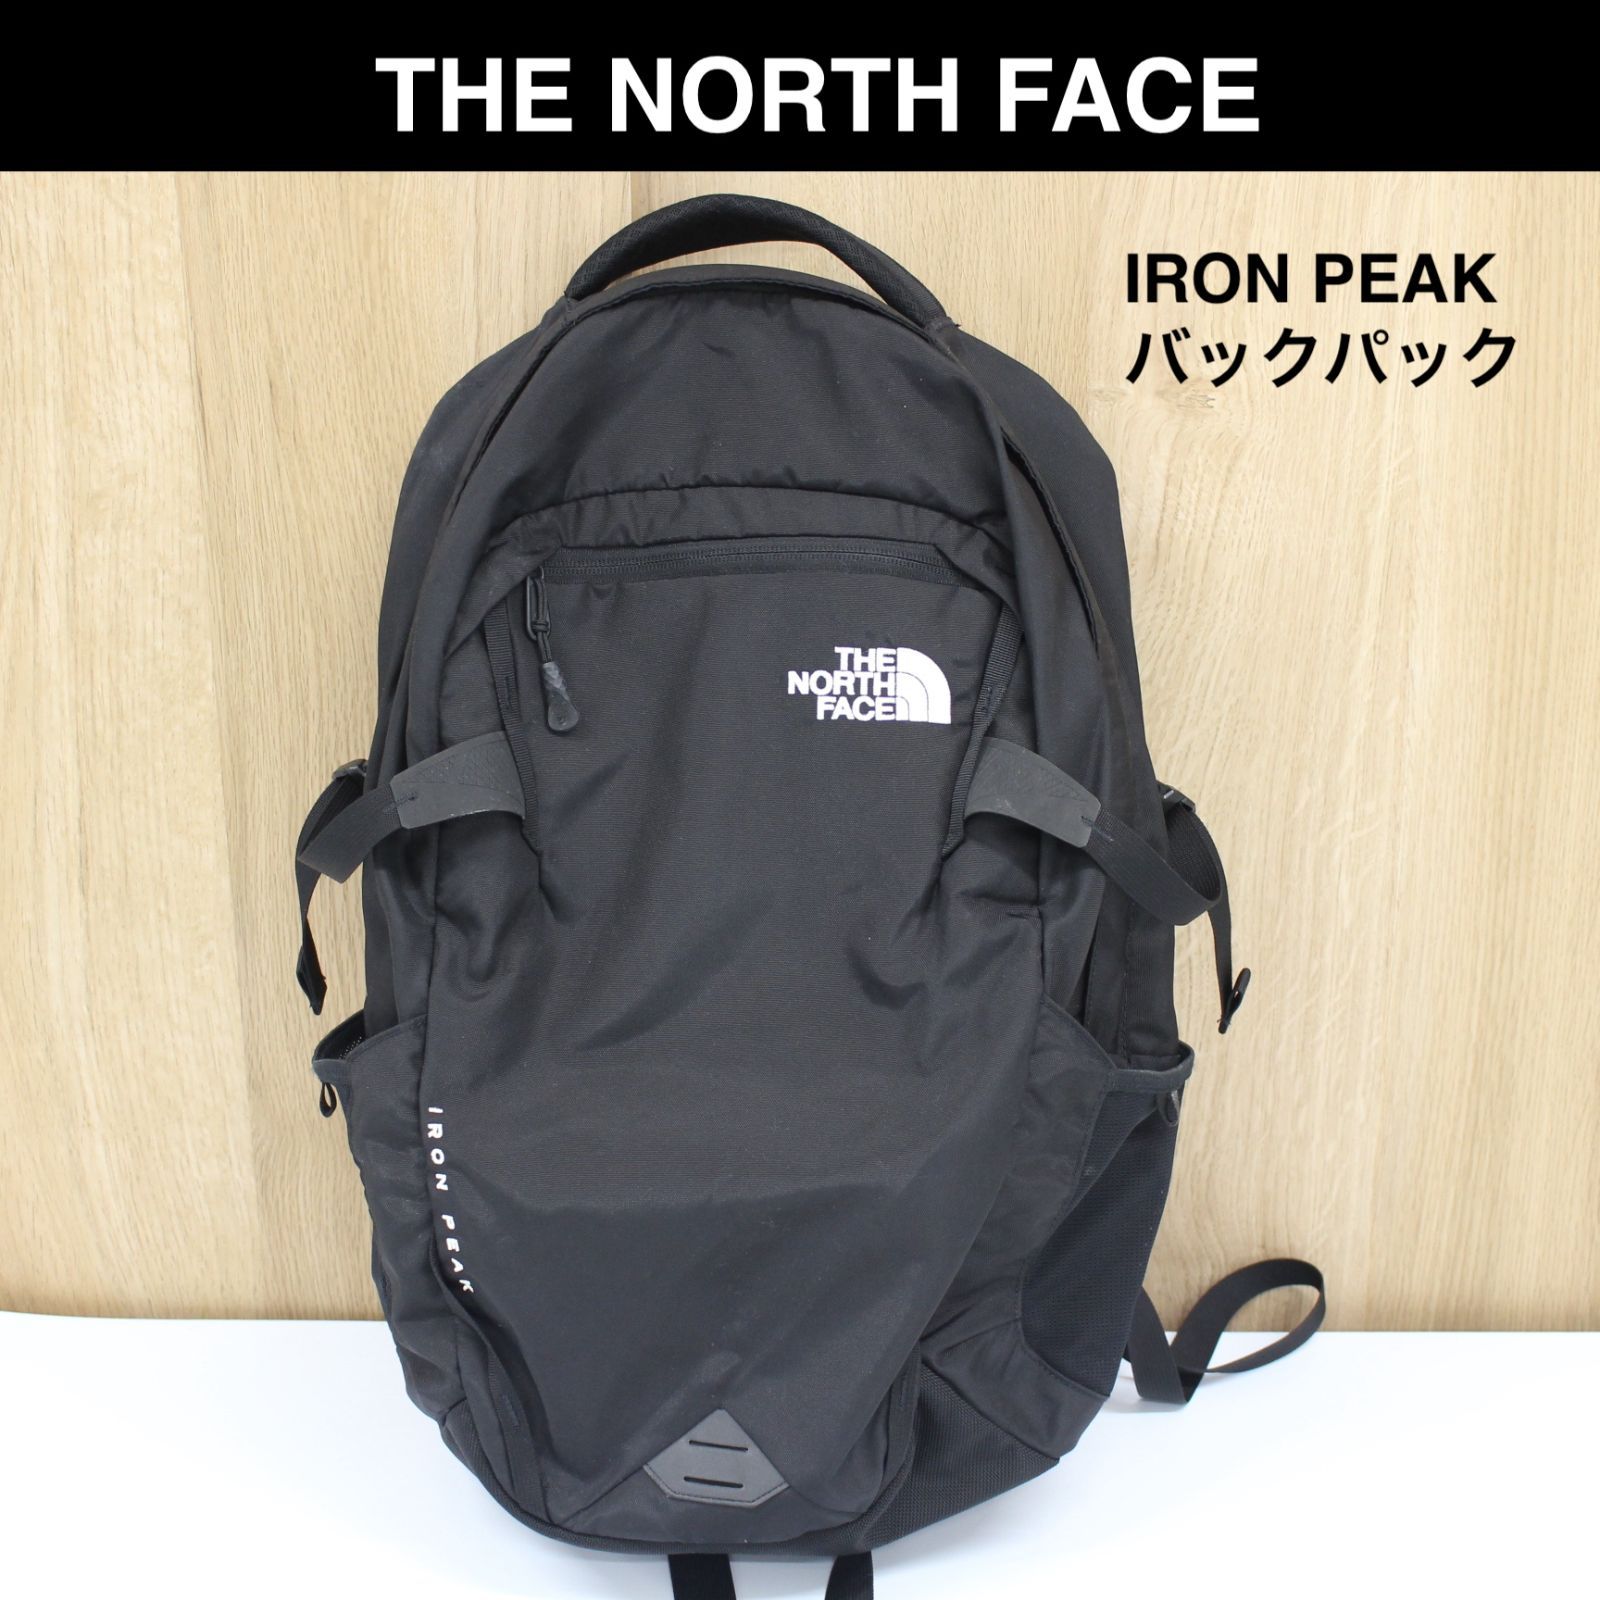 THE NORTH FACE  IRON PEAK【ブラック】